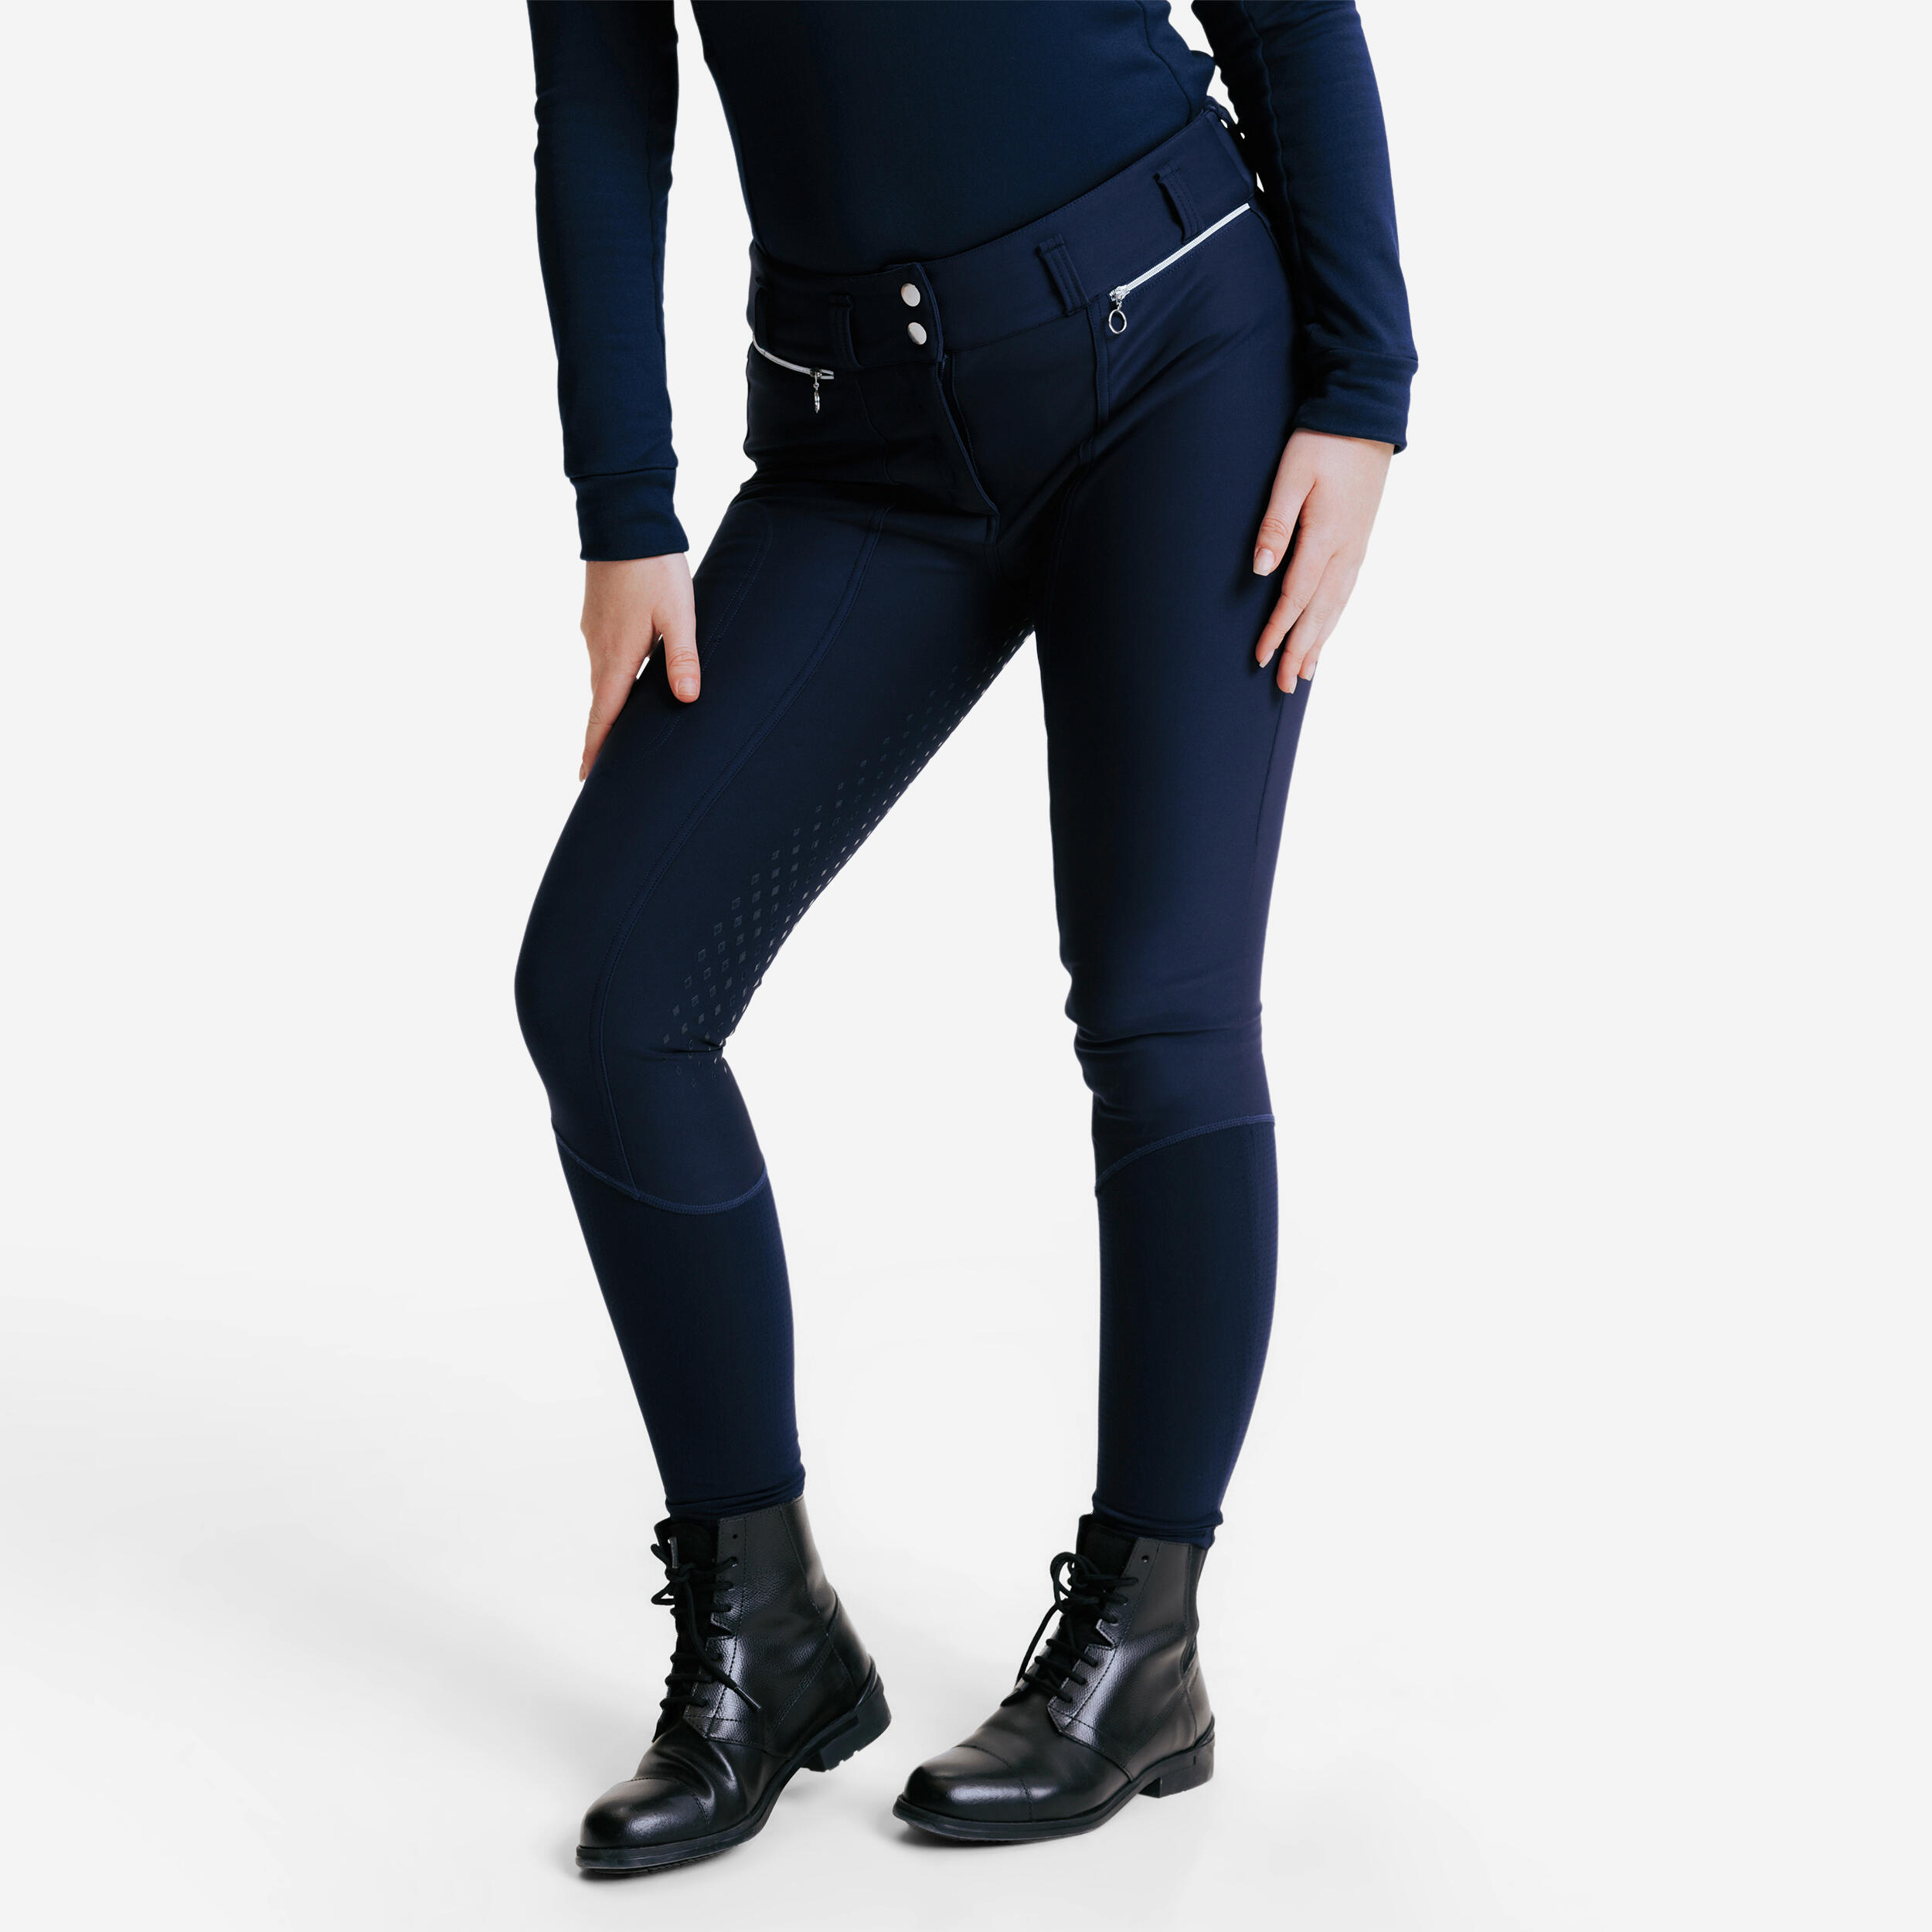 pantalon équitation chaud full grip femme - 900 marine - fouganza